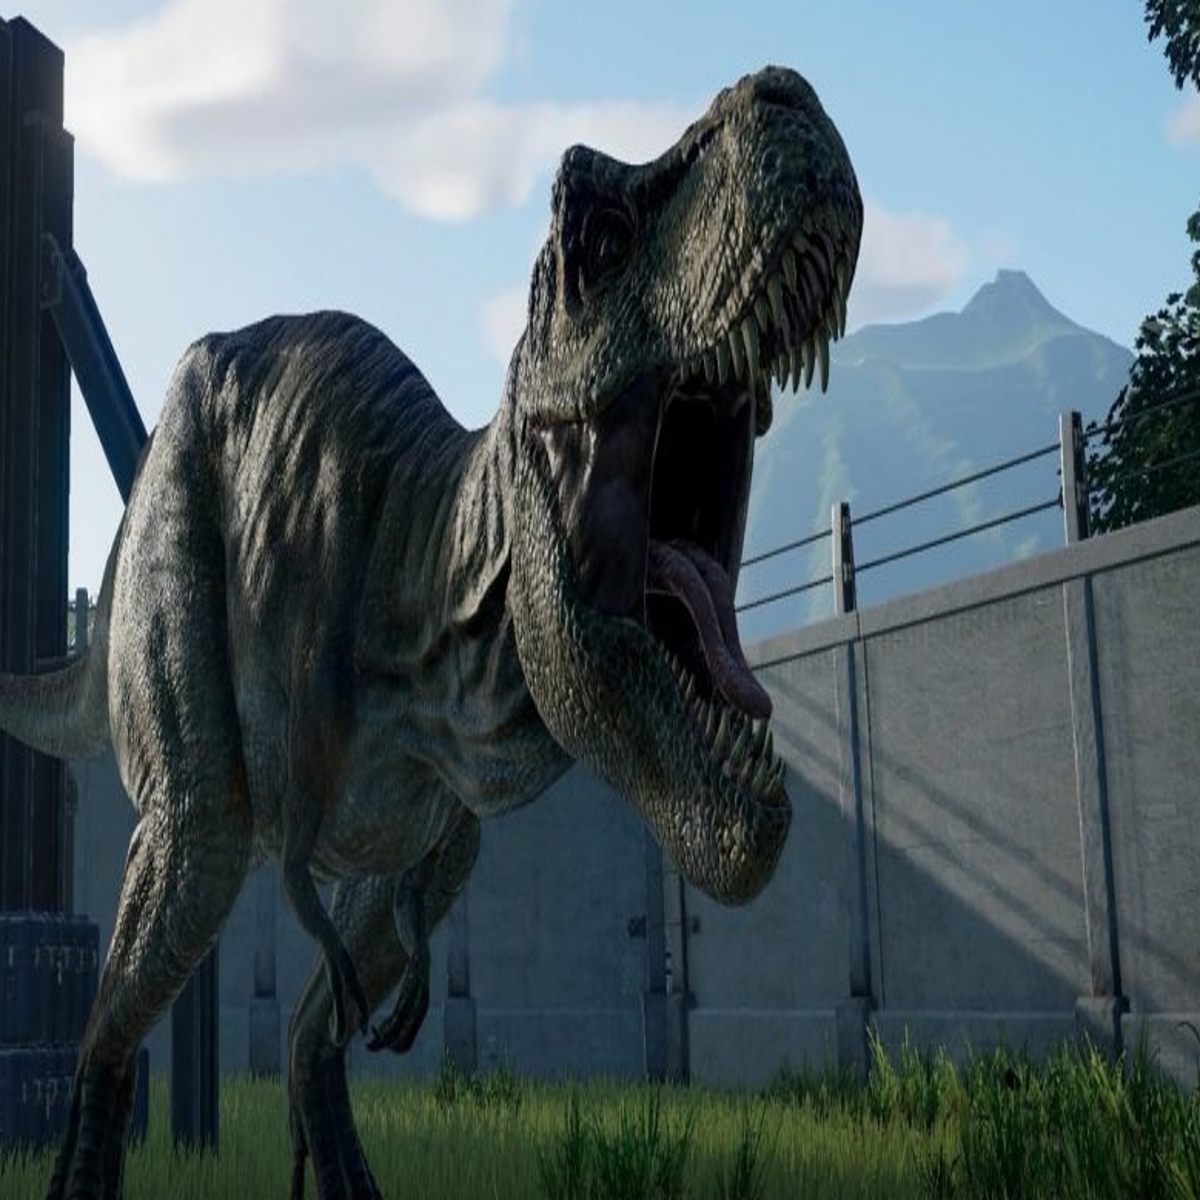 Jurassic World Evolved Tyrannosaurus Rex